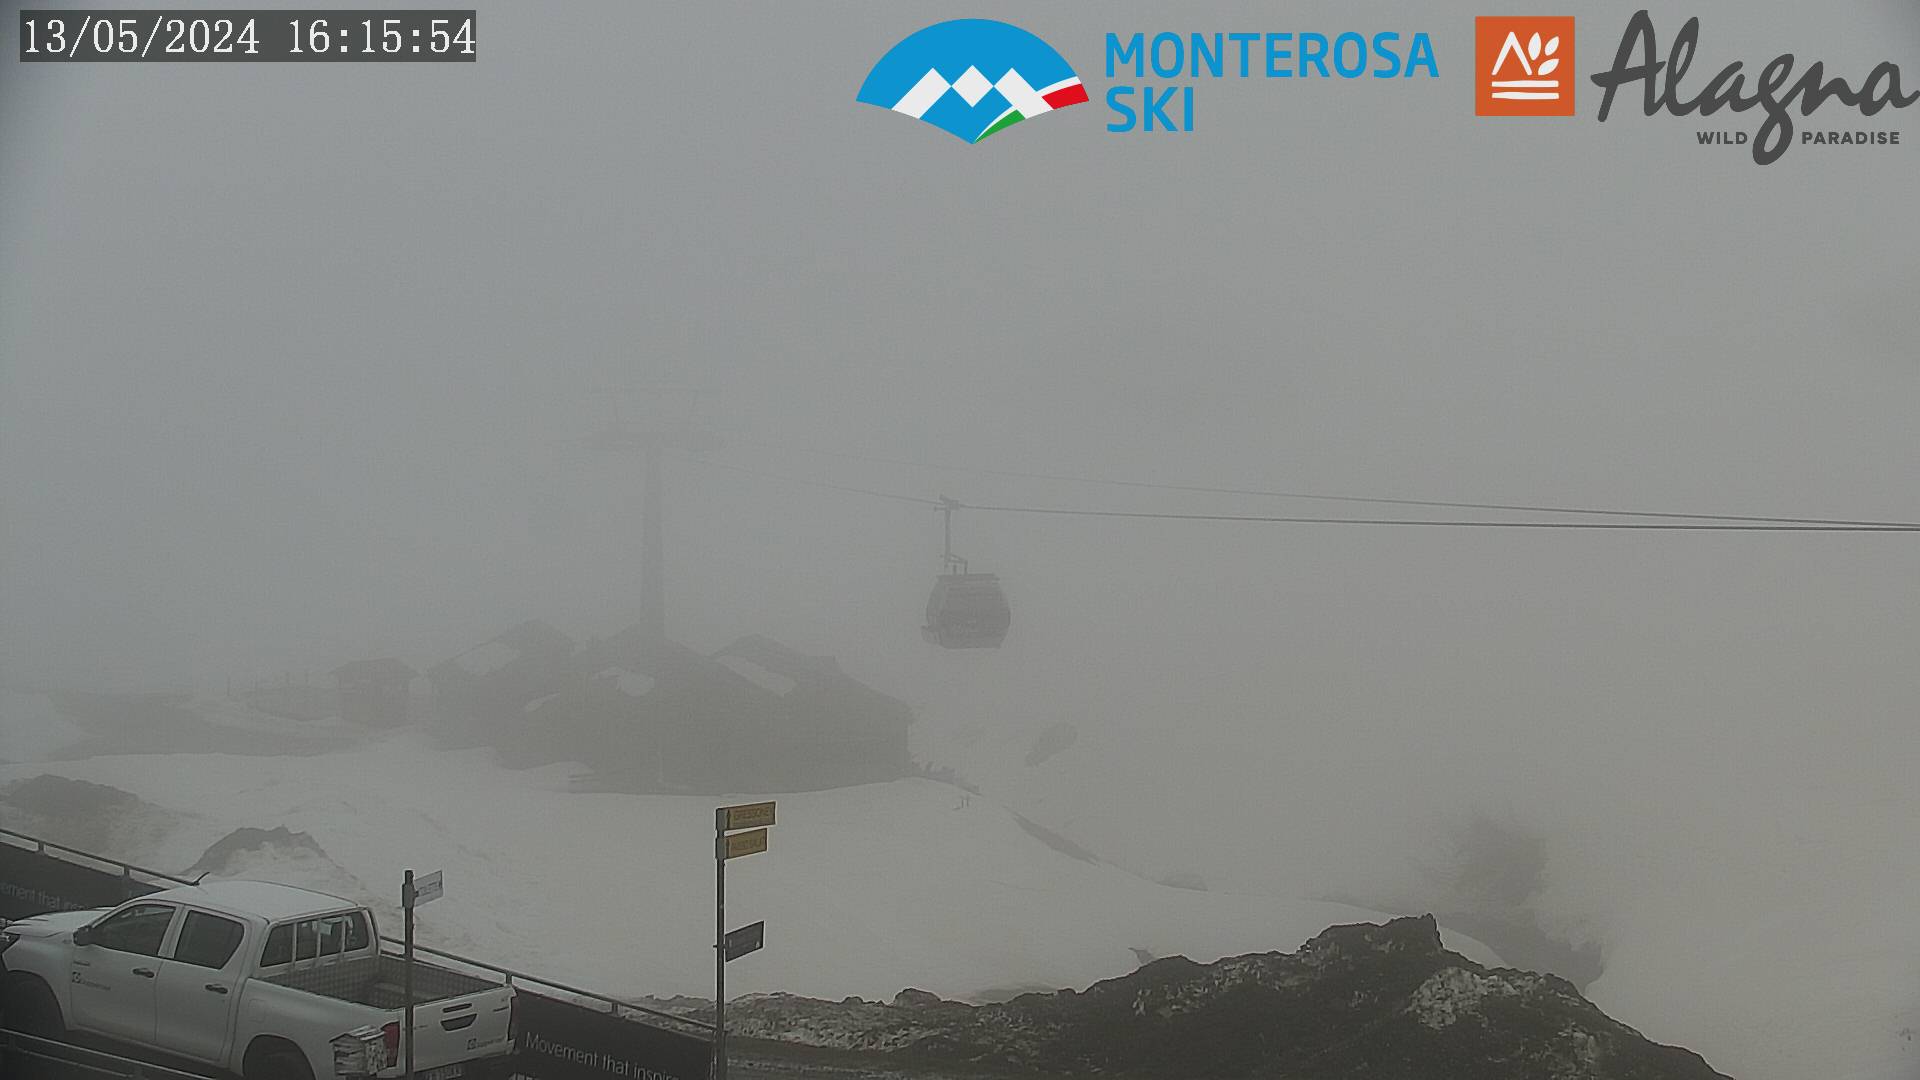 Monterosa-ski Alagna Valsesia - Pianalunga